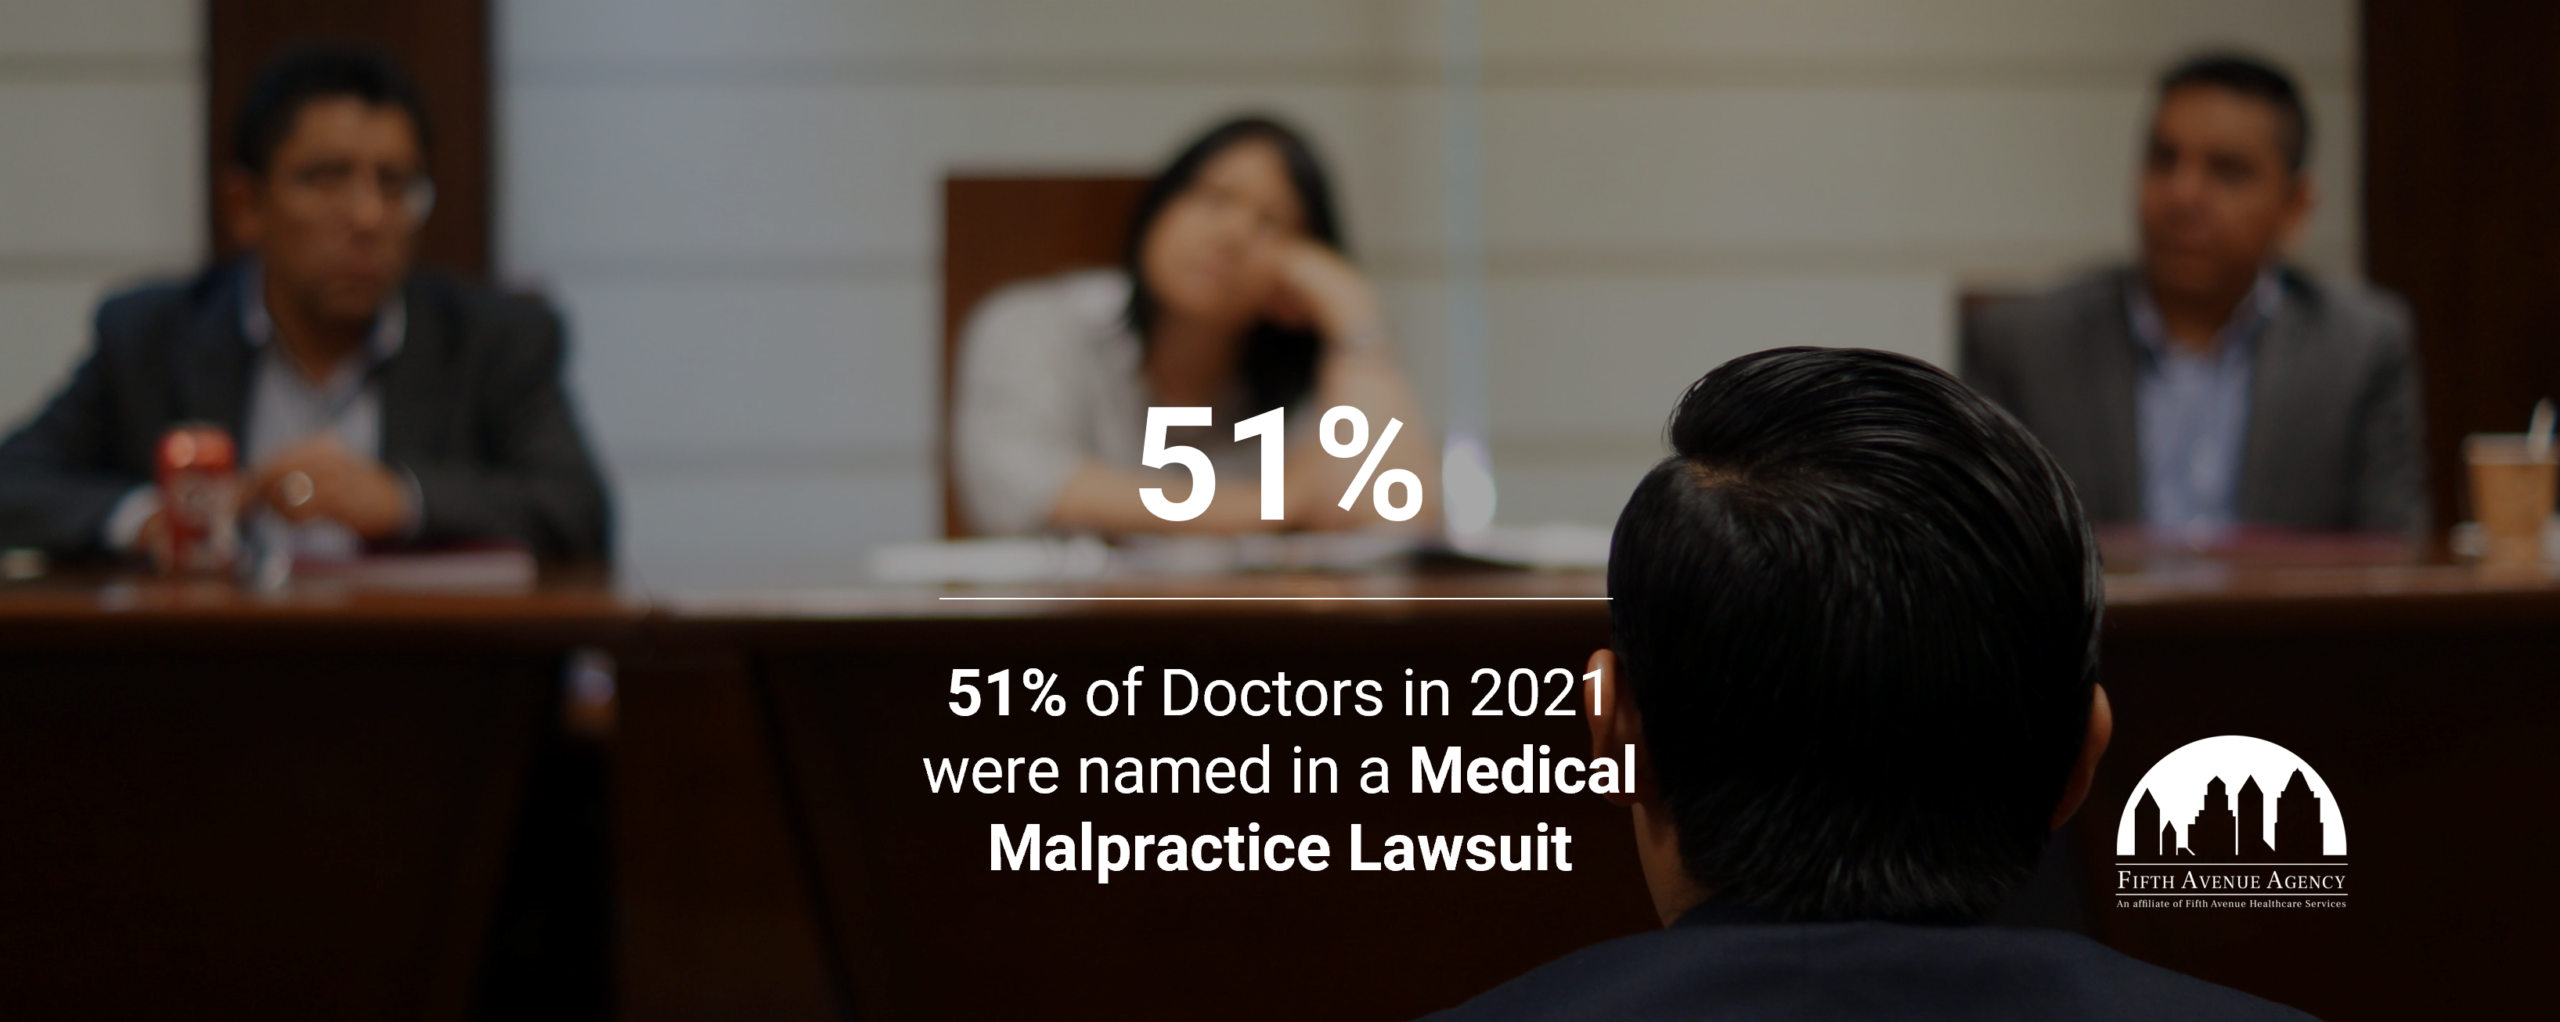 51% of Doctors Named In Medical Malpractice Lawsuit